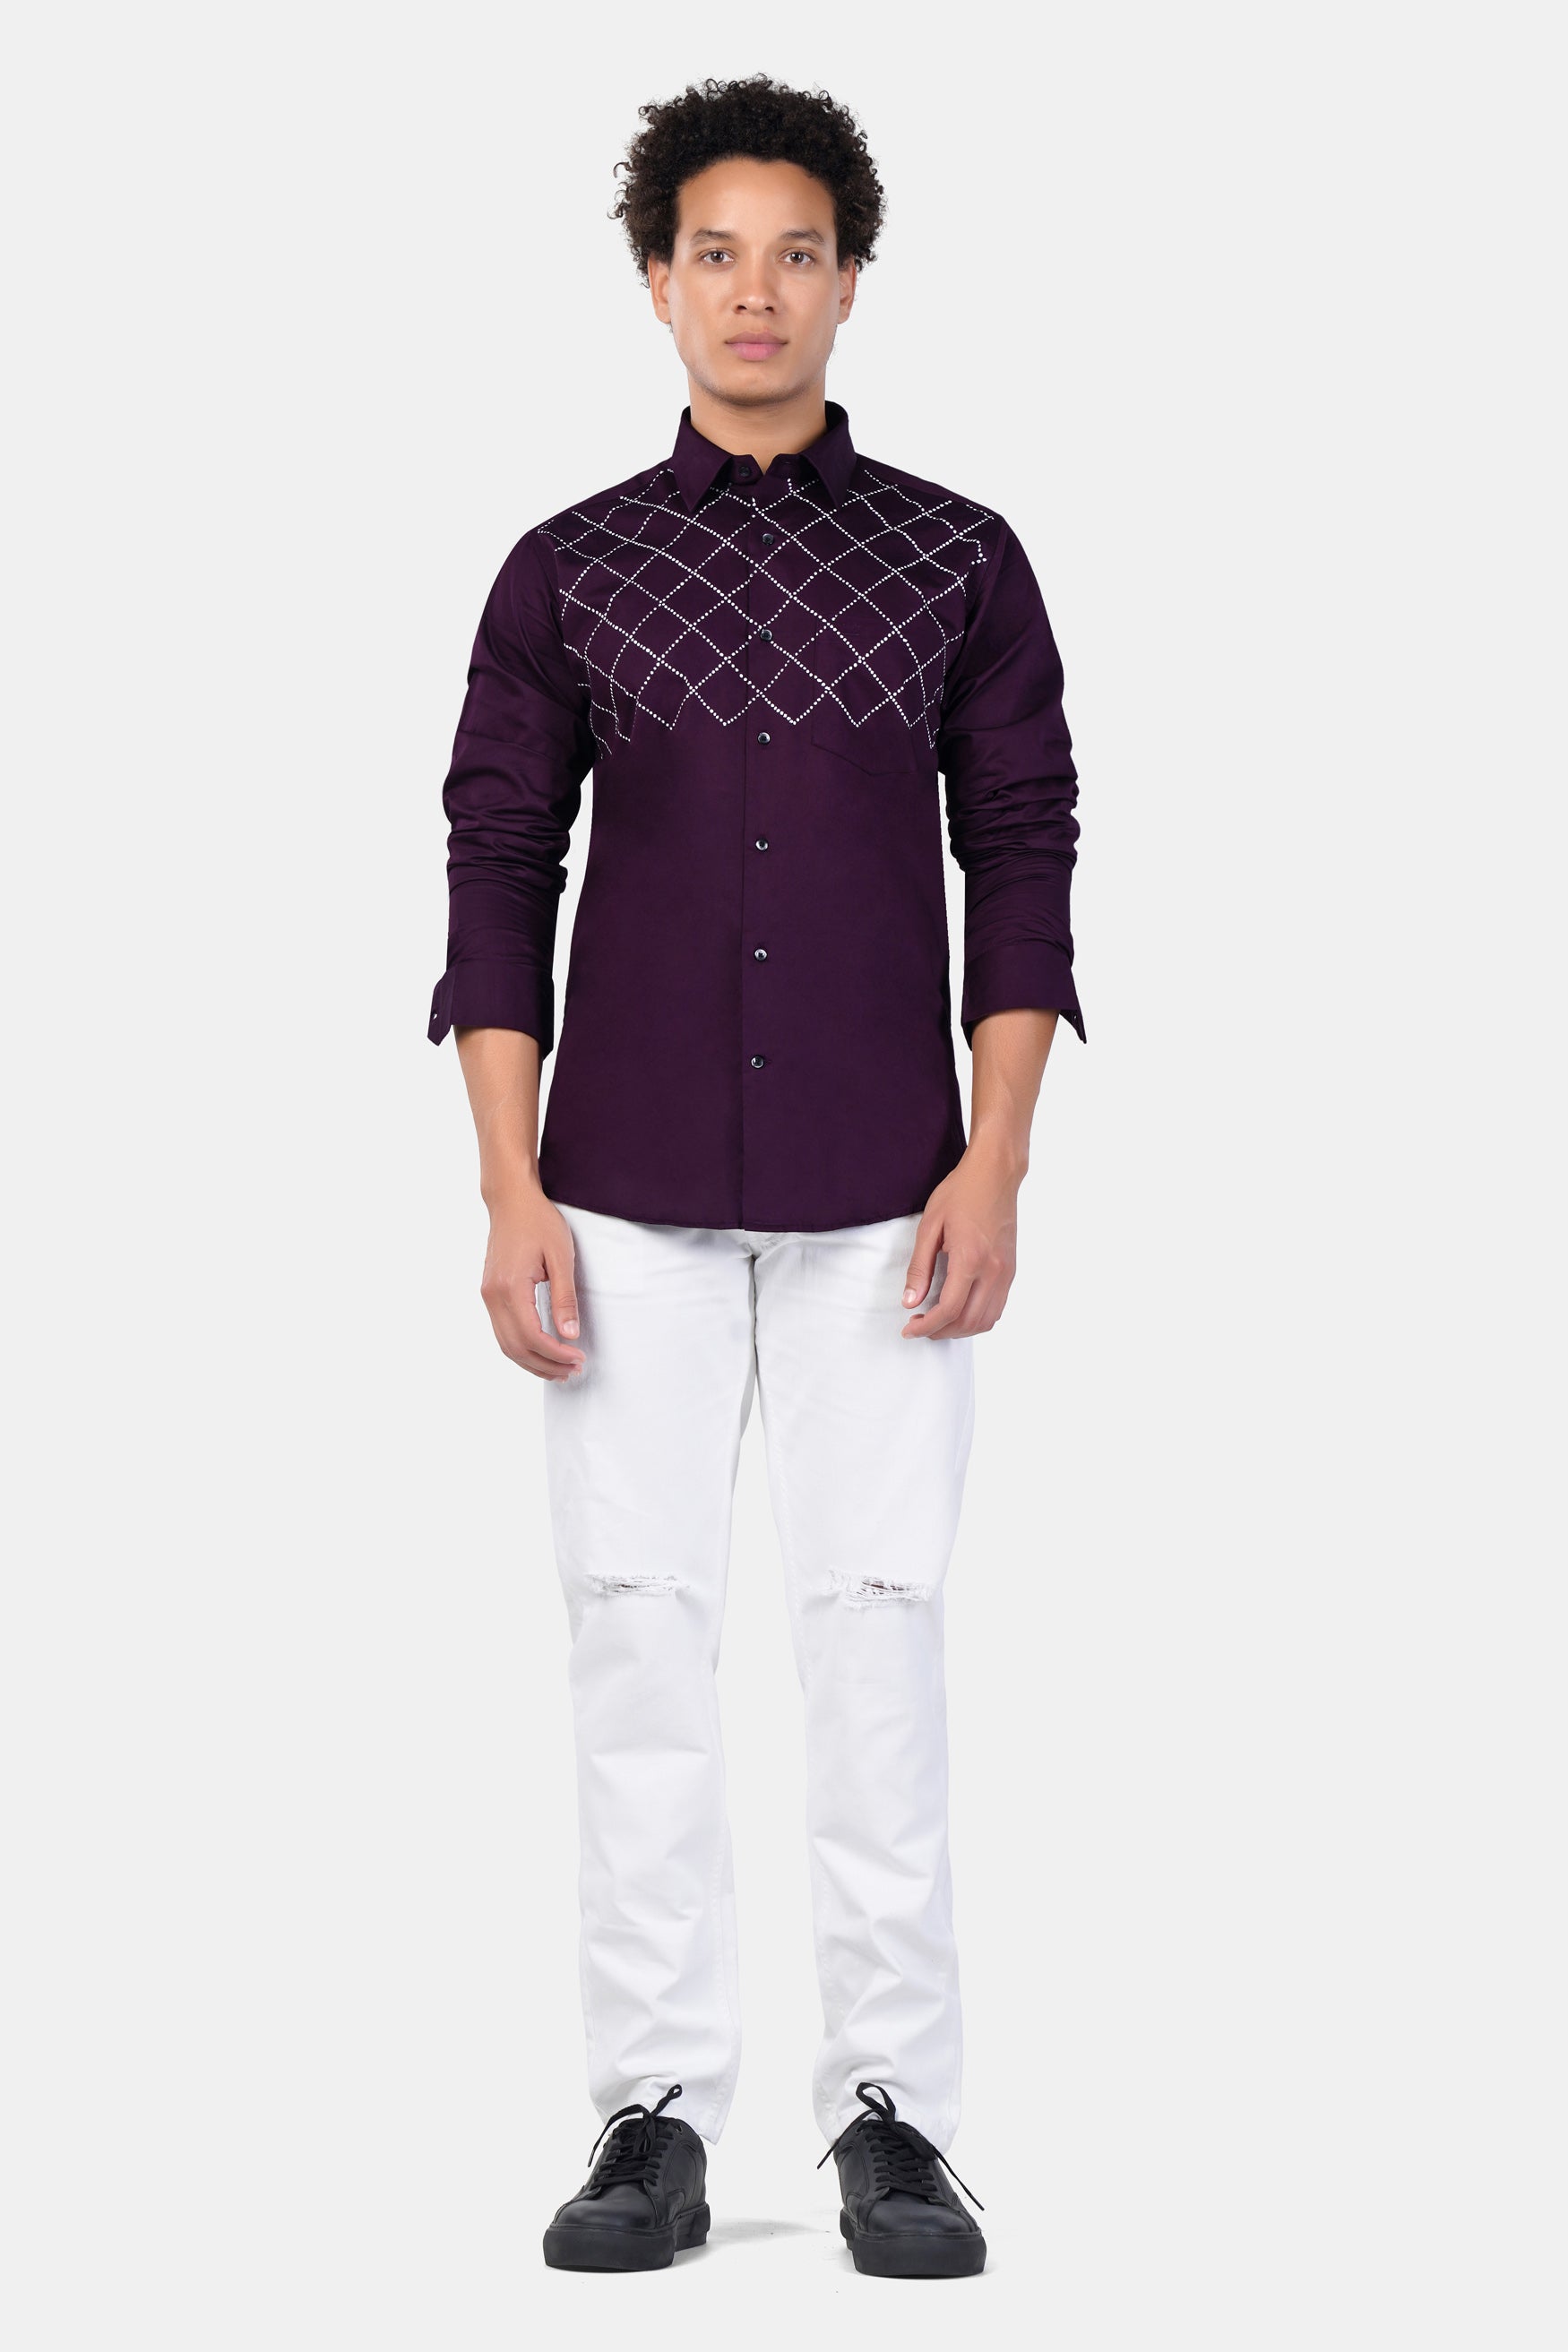 Eclipse Maroon Criss Cross Hand Painted Subtle Sheen Super Soft Premium Cotton Designer Shirt